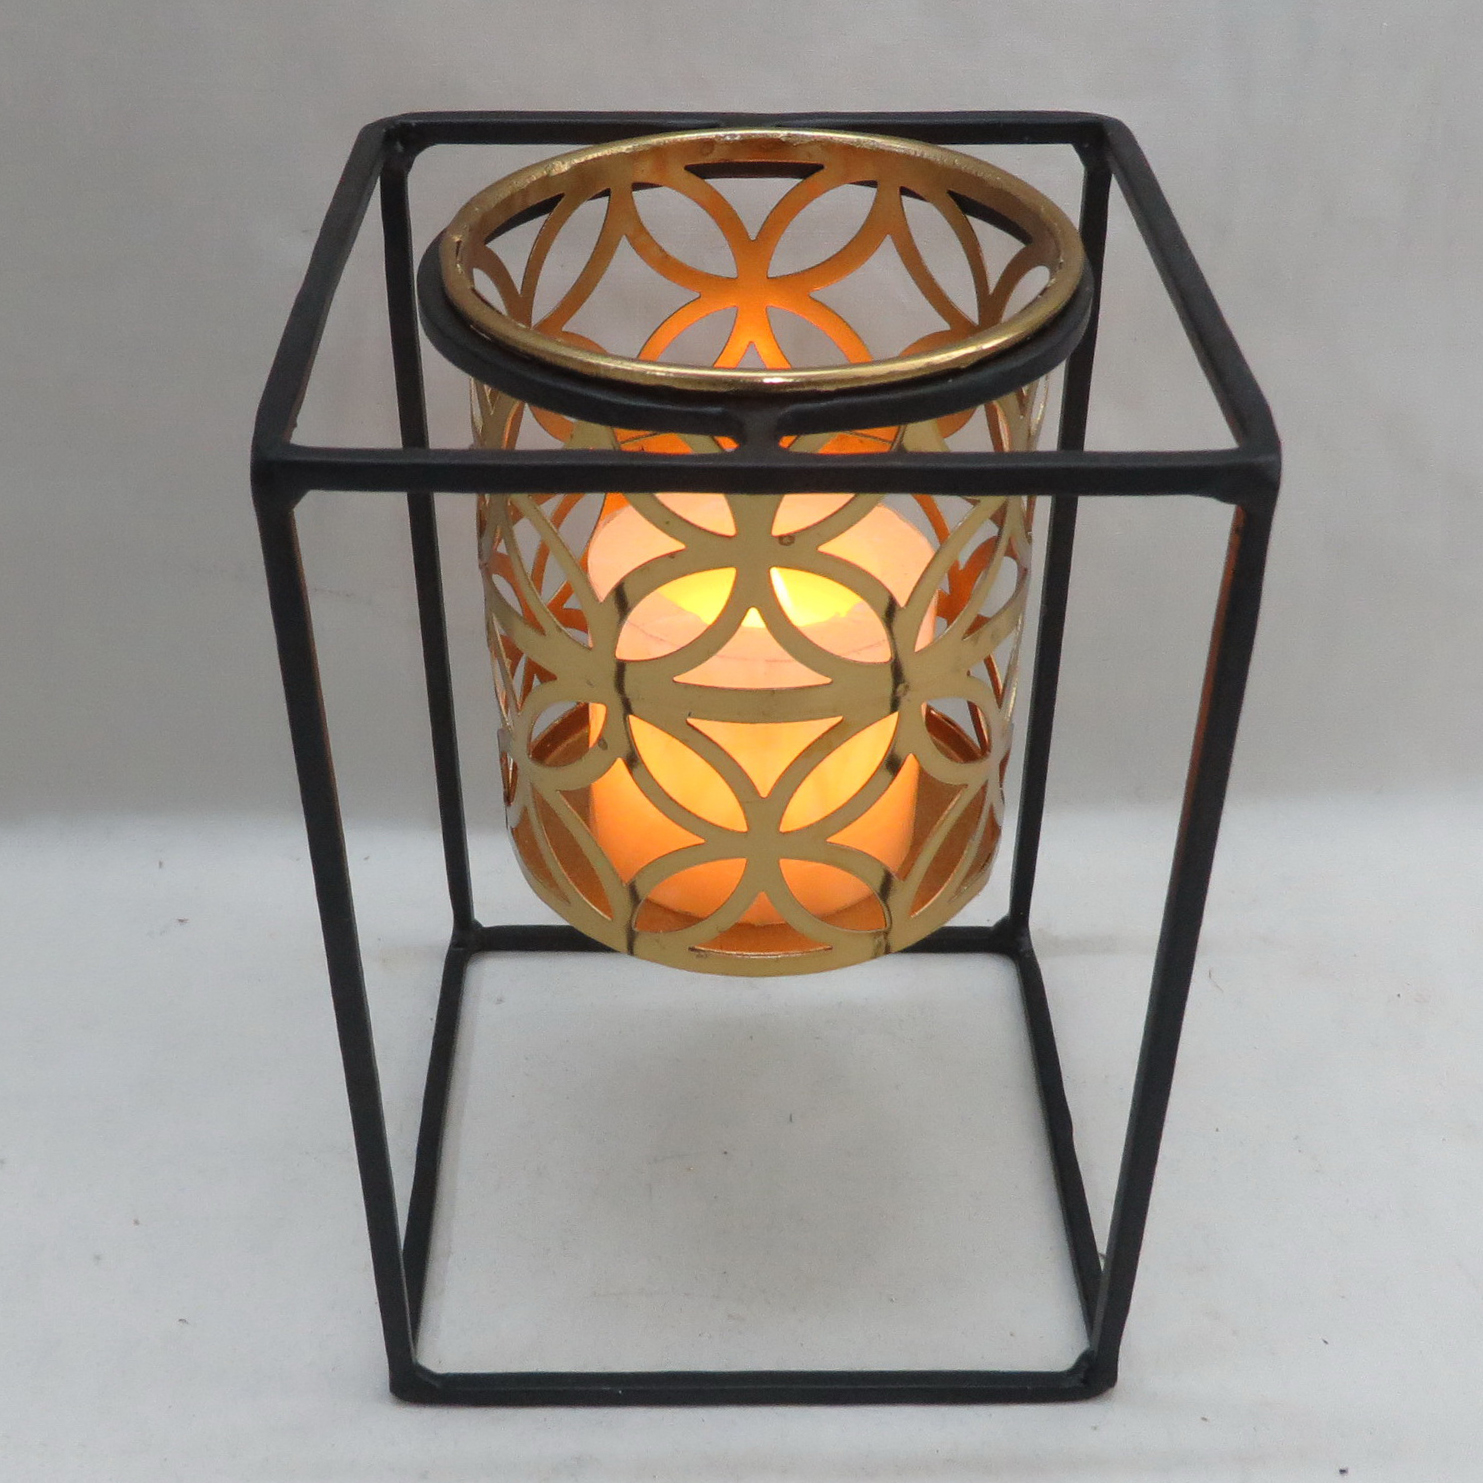 Tealight church candle holder lantern design